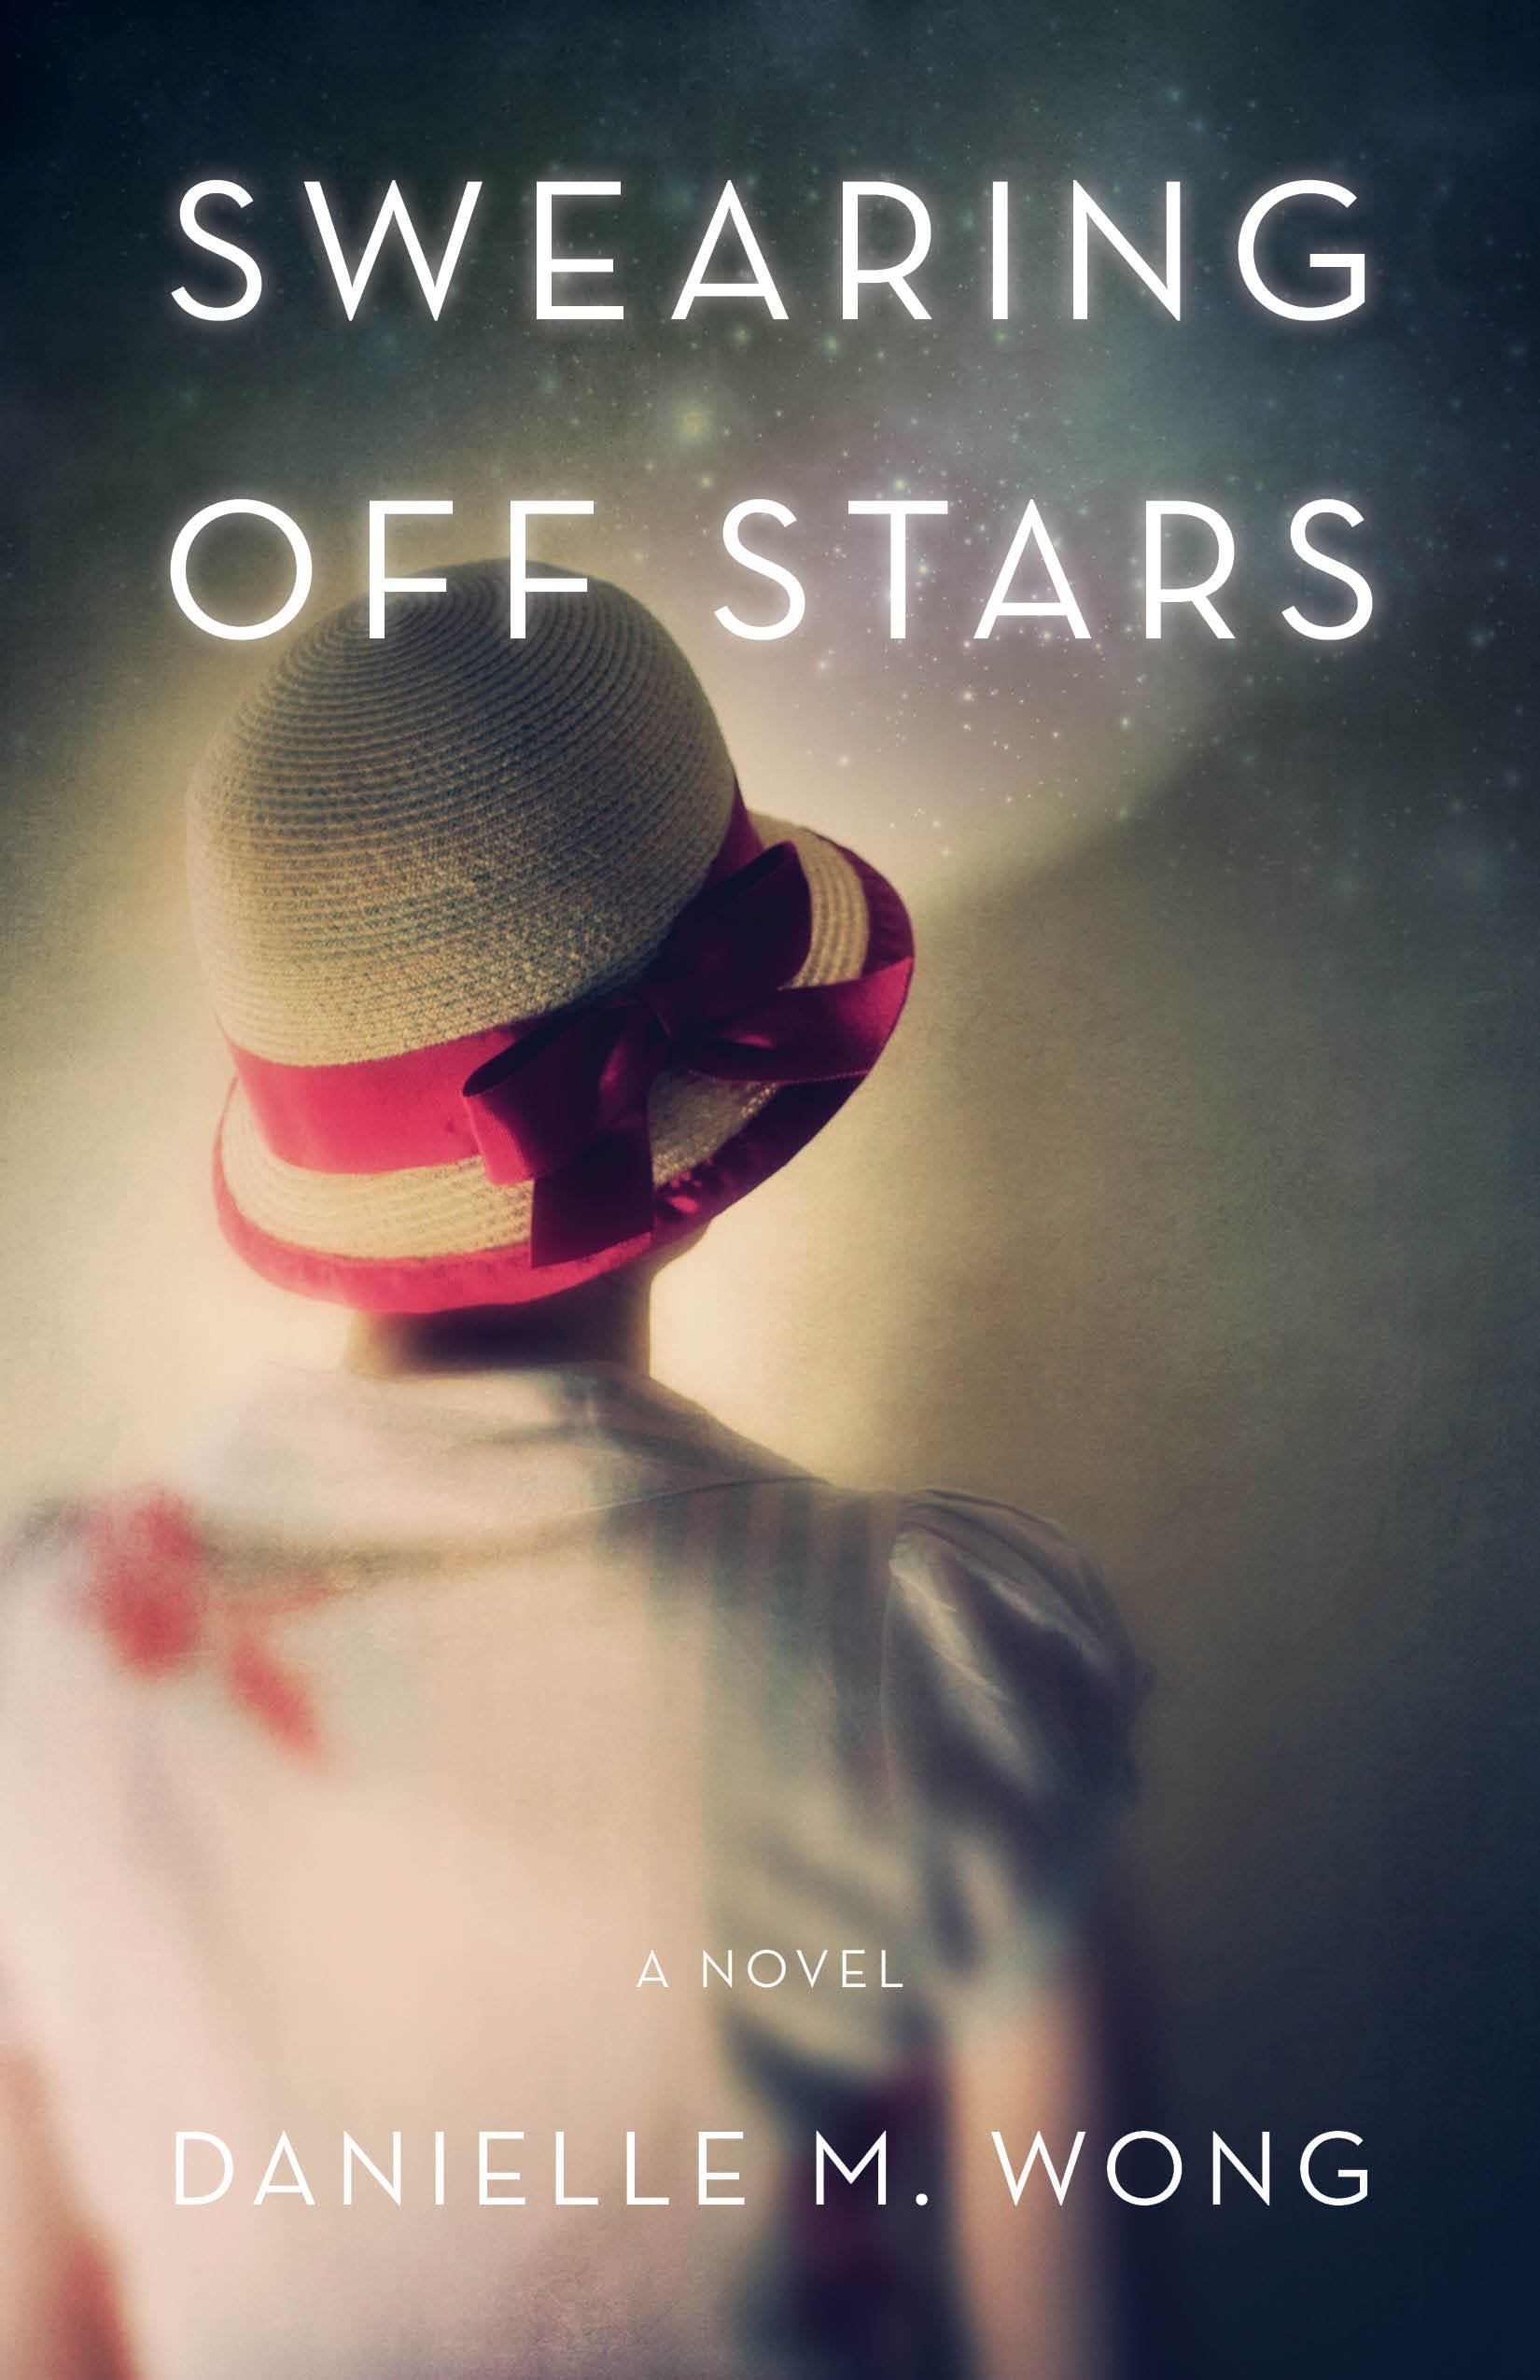 Swearing Off Stars by Danielle M. Wong